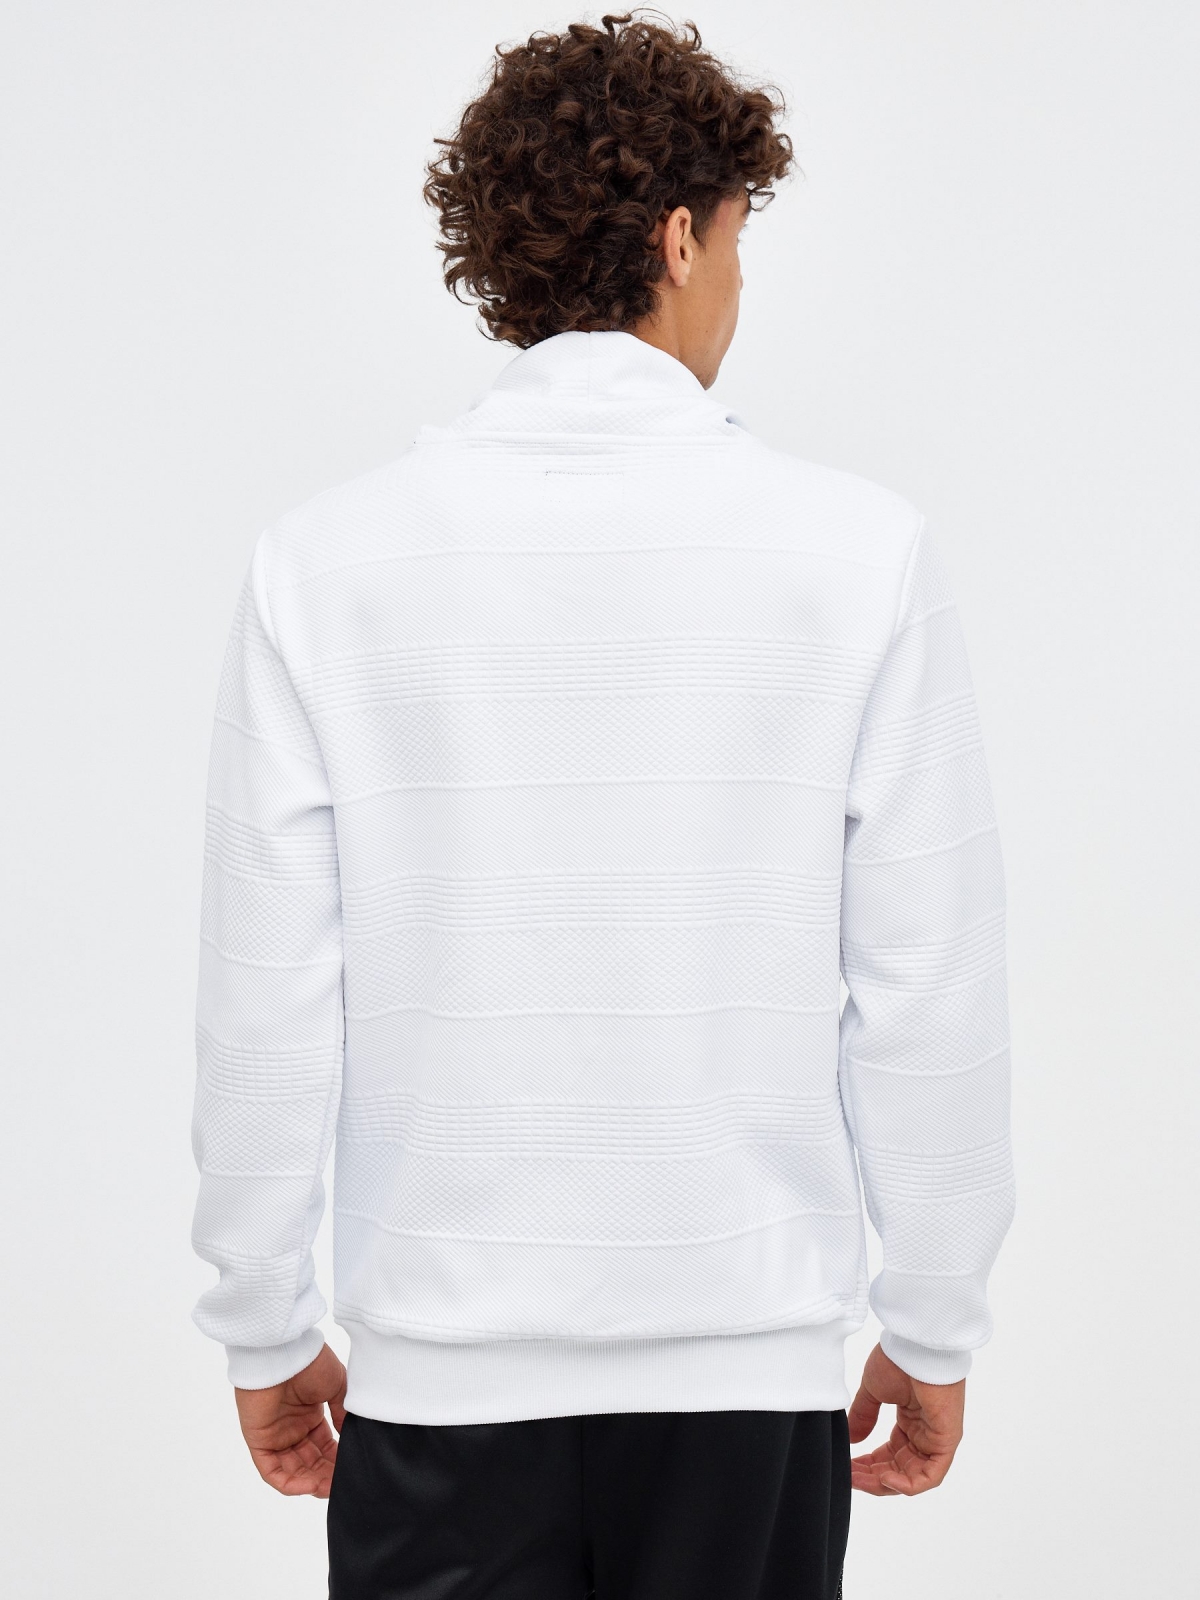 Sweatshirt de gola redonda texturada branco vista meia traseira